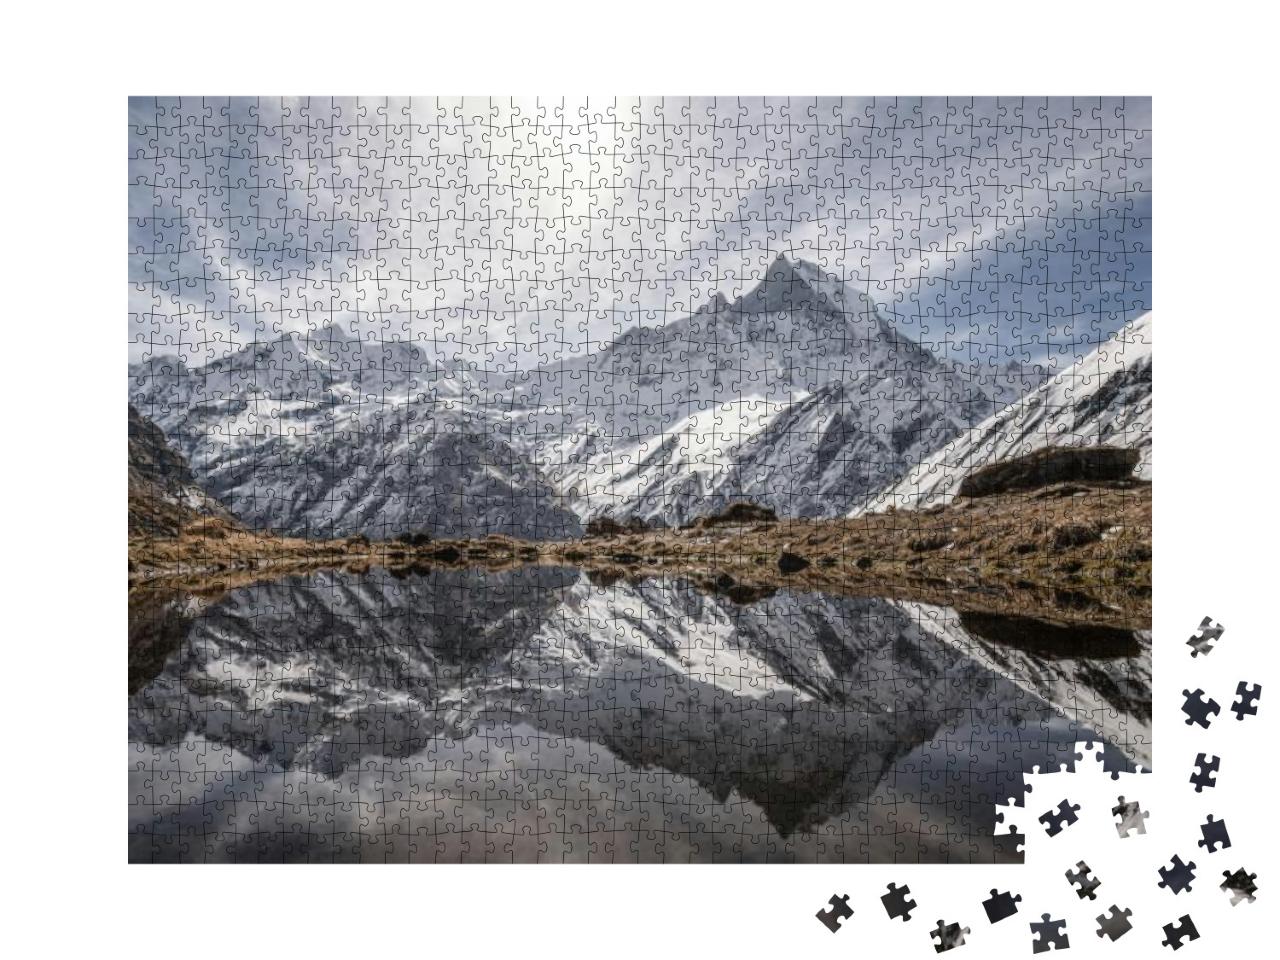 Puzzle 1000 Teile „Perfekte Reflexion in klarem Bergsee - Annapurna Trekking Route, Himalalya“